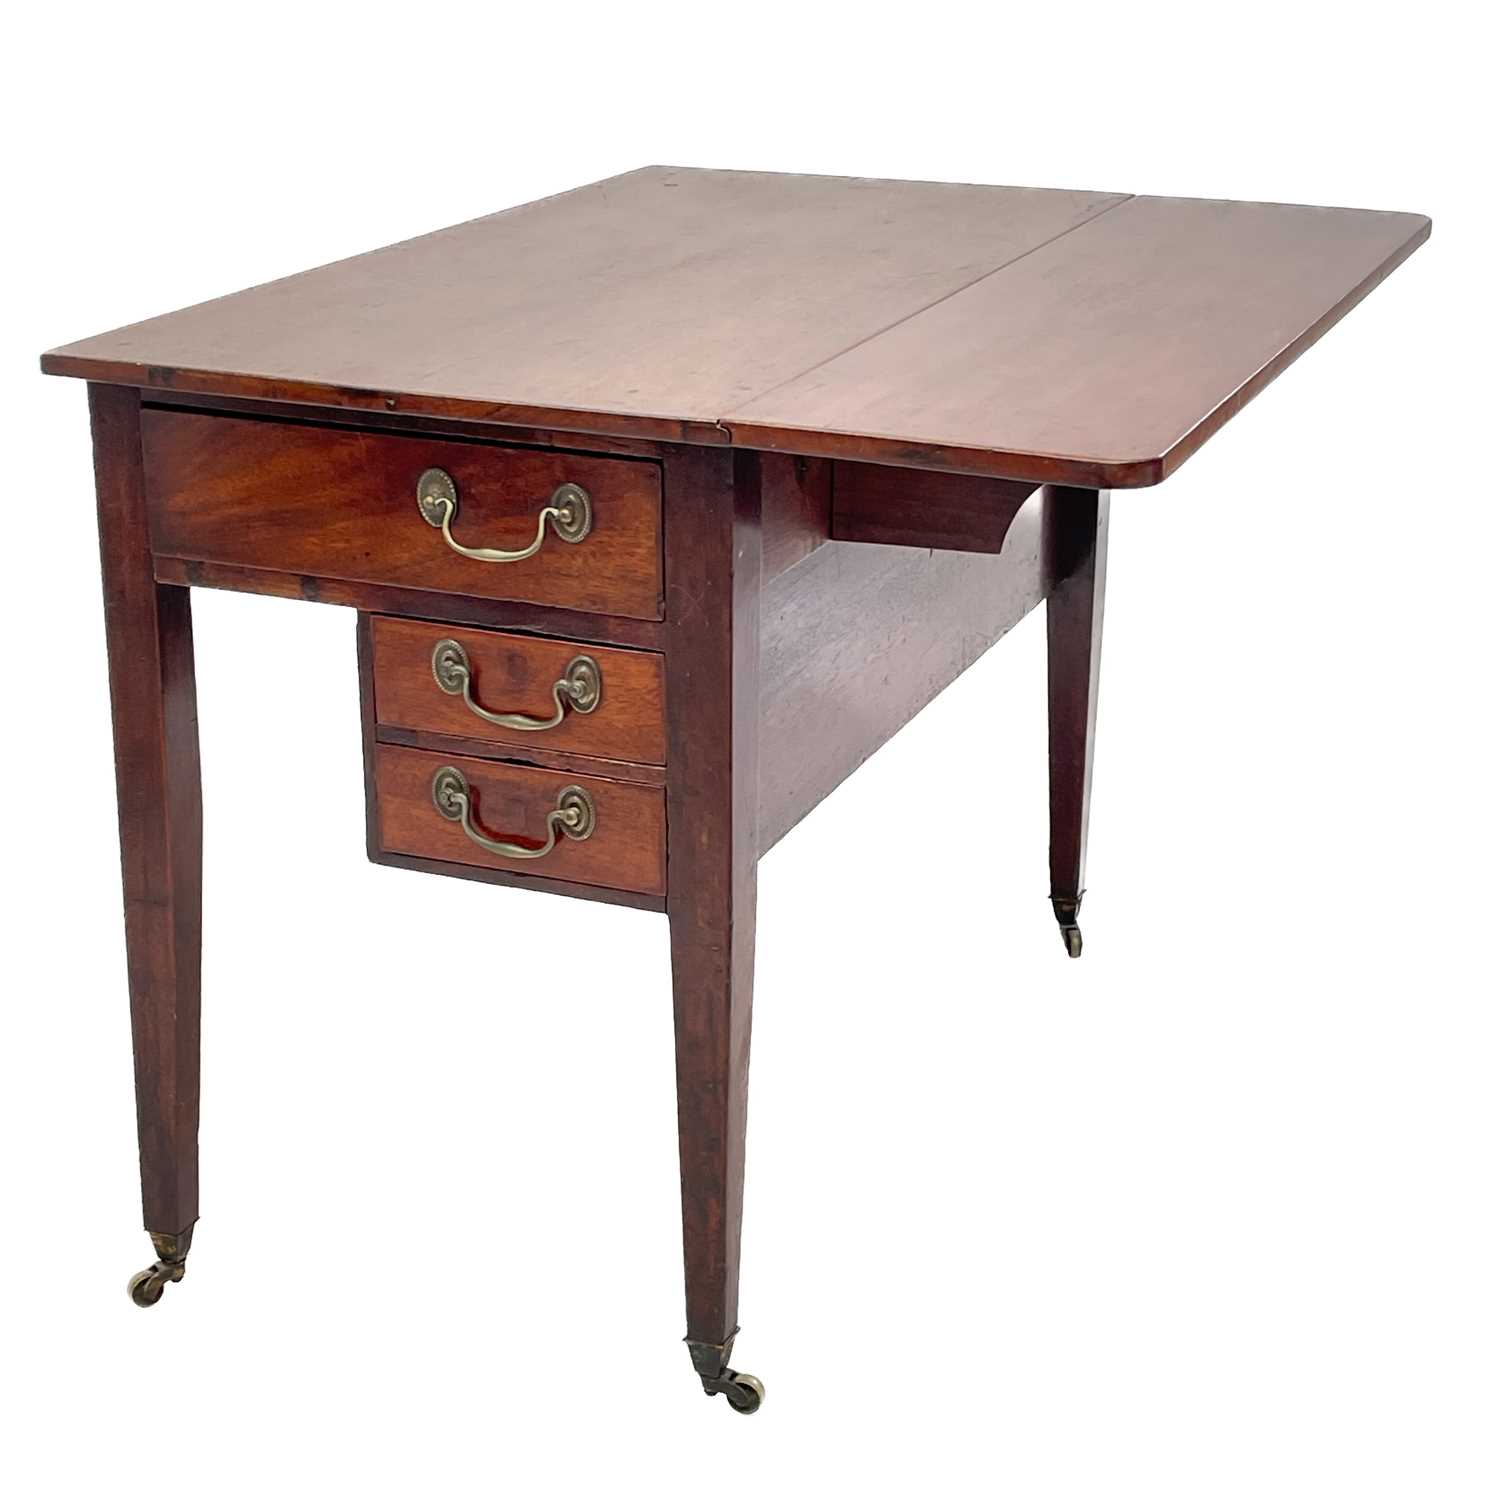 An unusual George III mahogany estate writing desk.